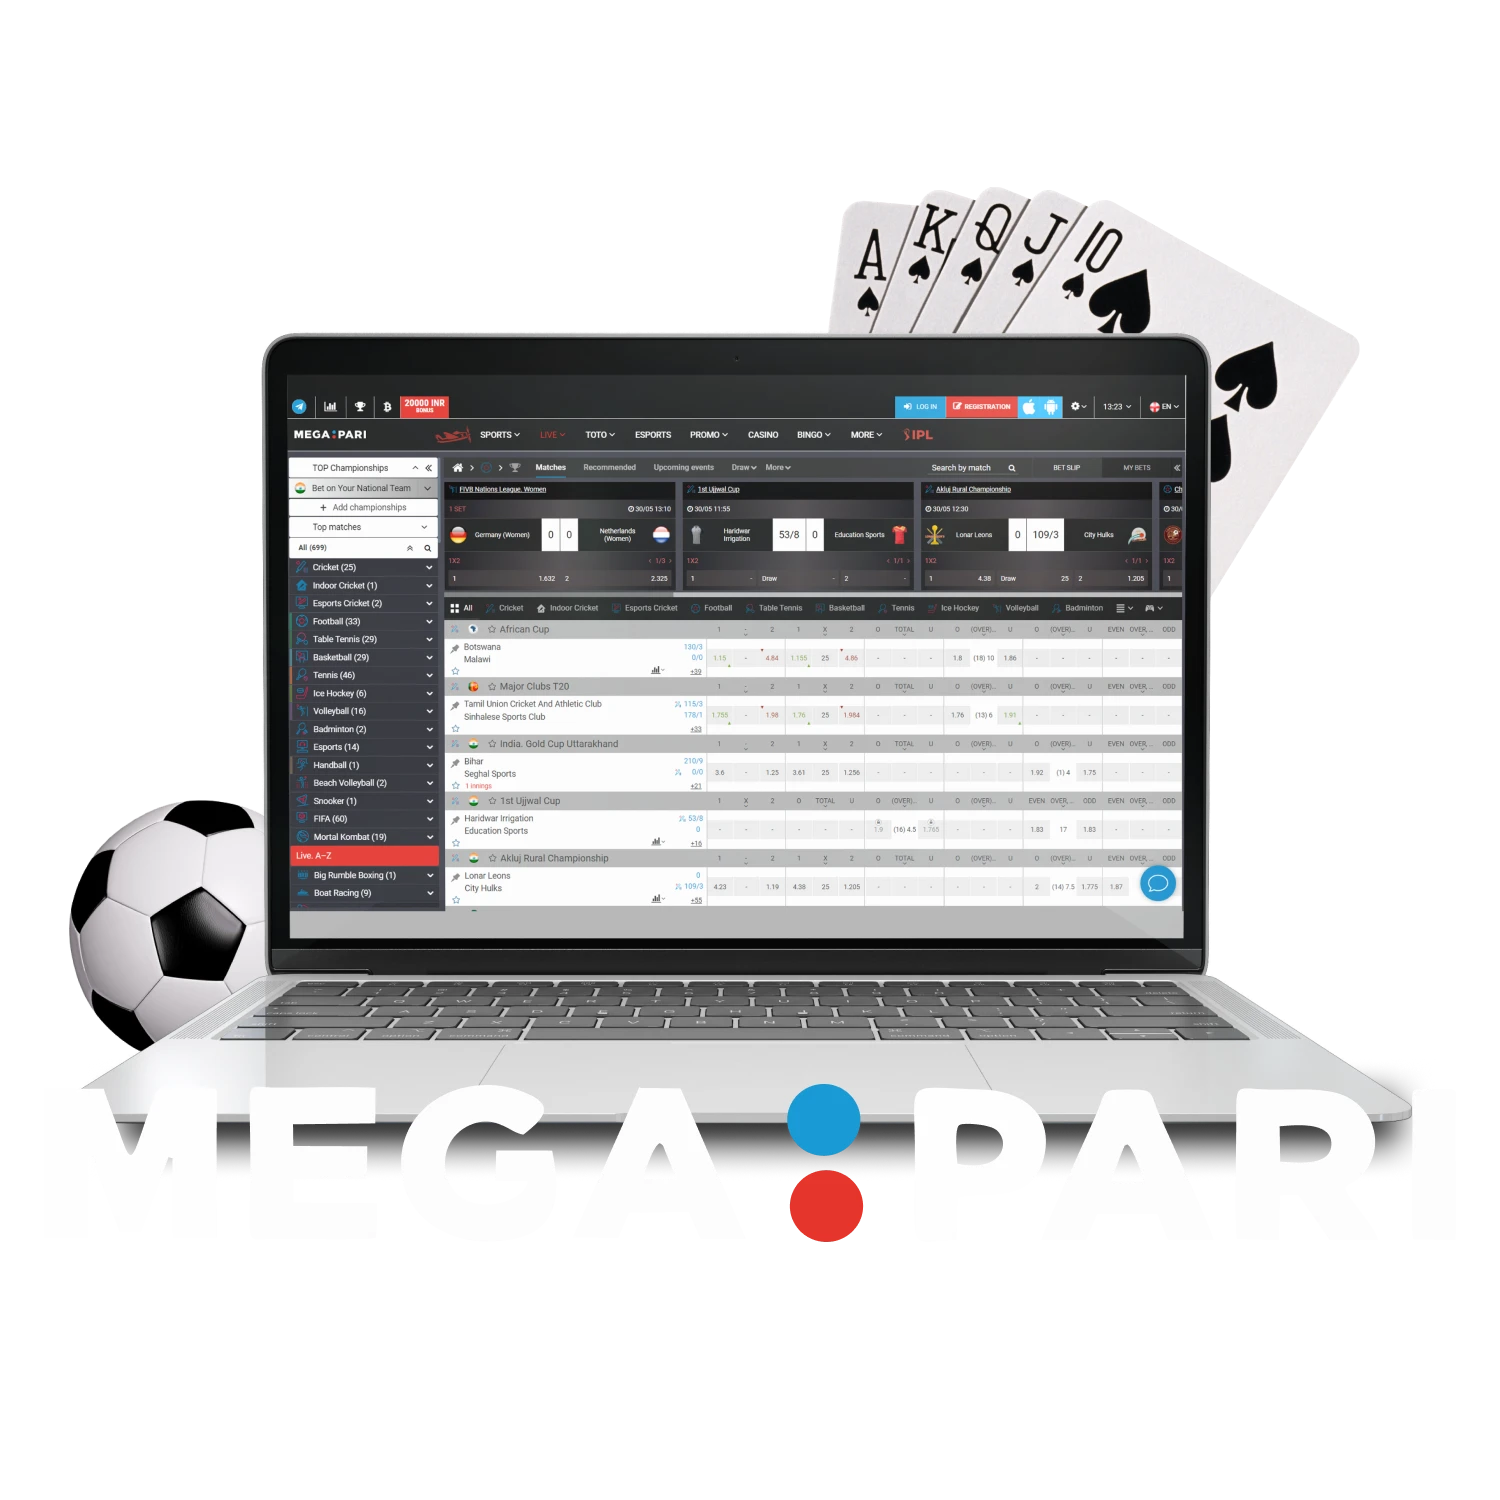 Choose the PC application from Megapari.